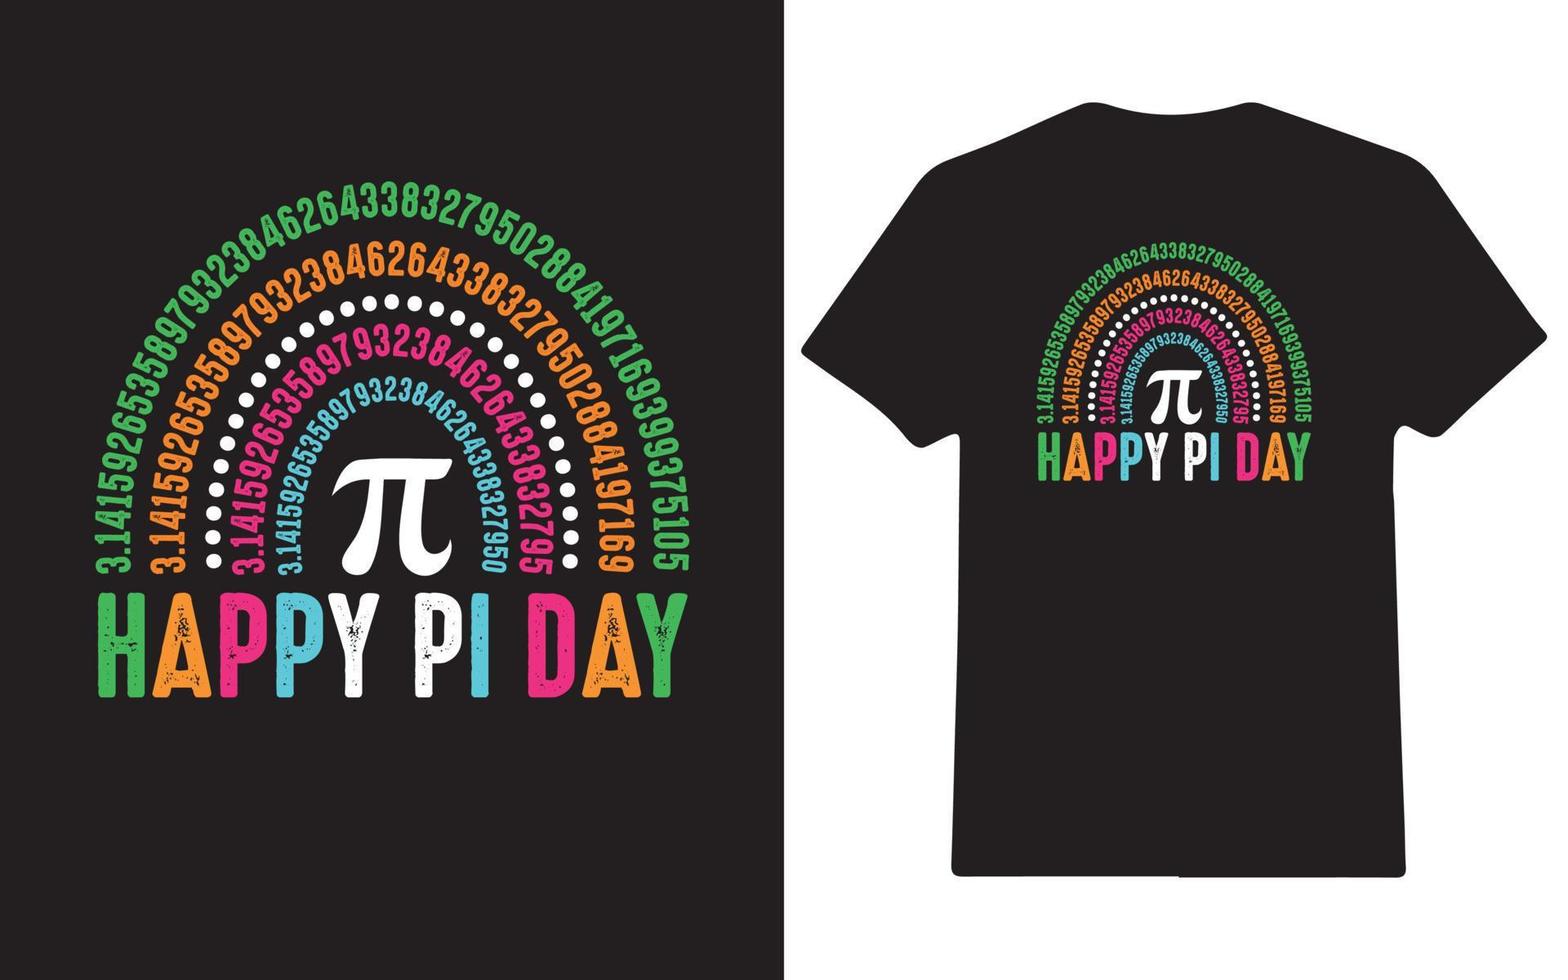 Happy pi day t-shirt design vector